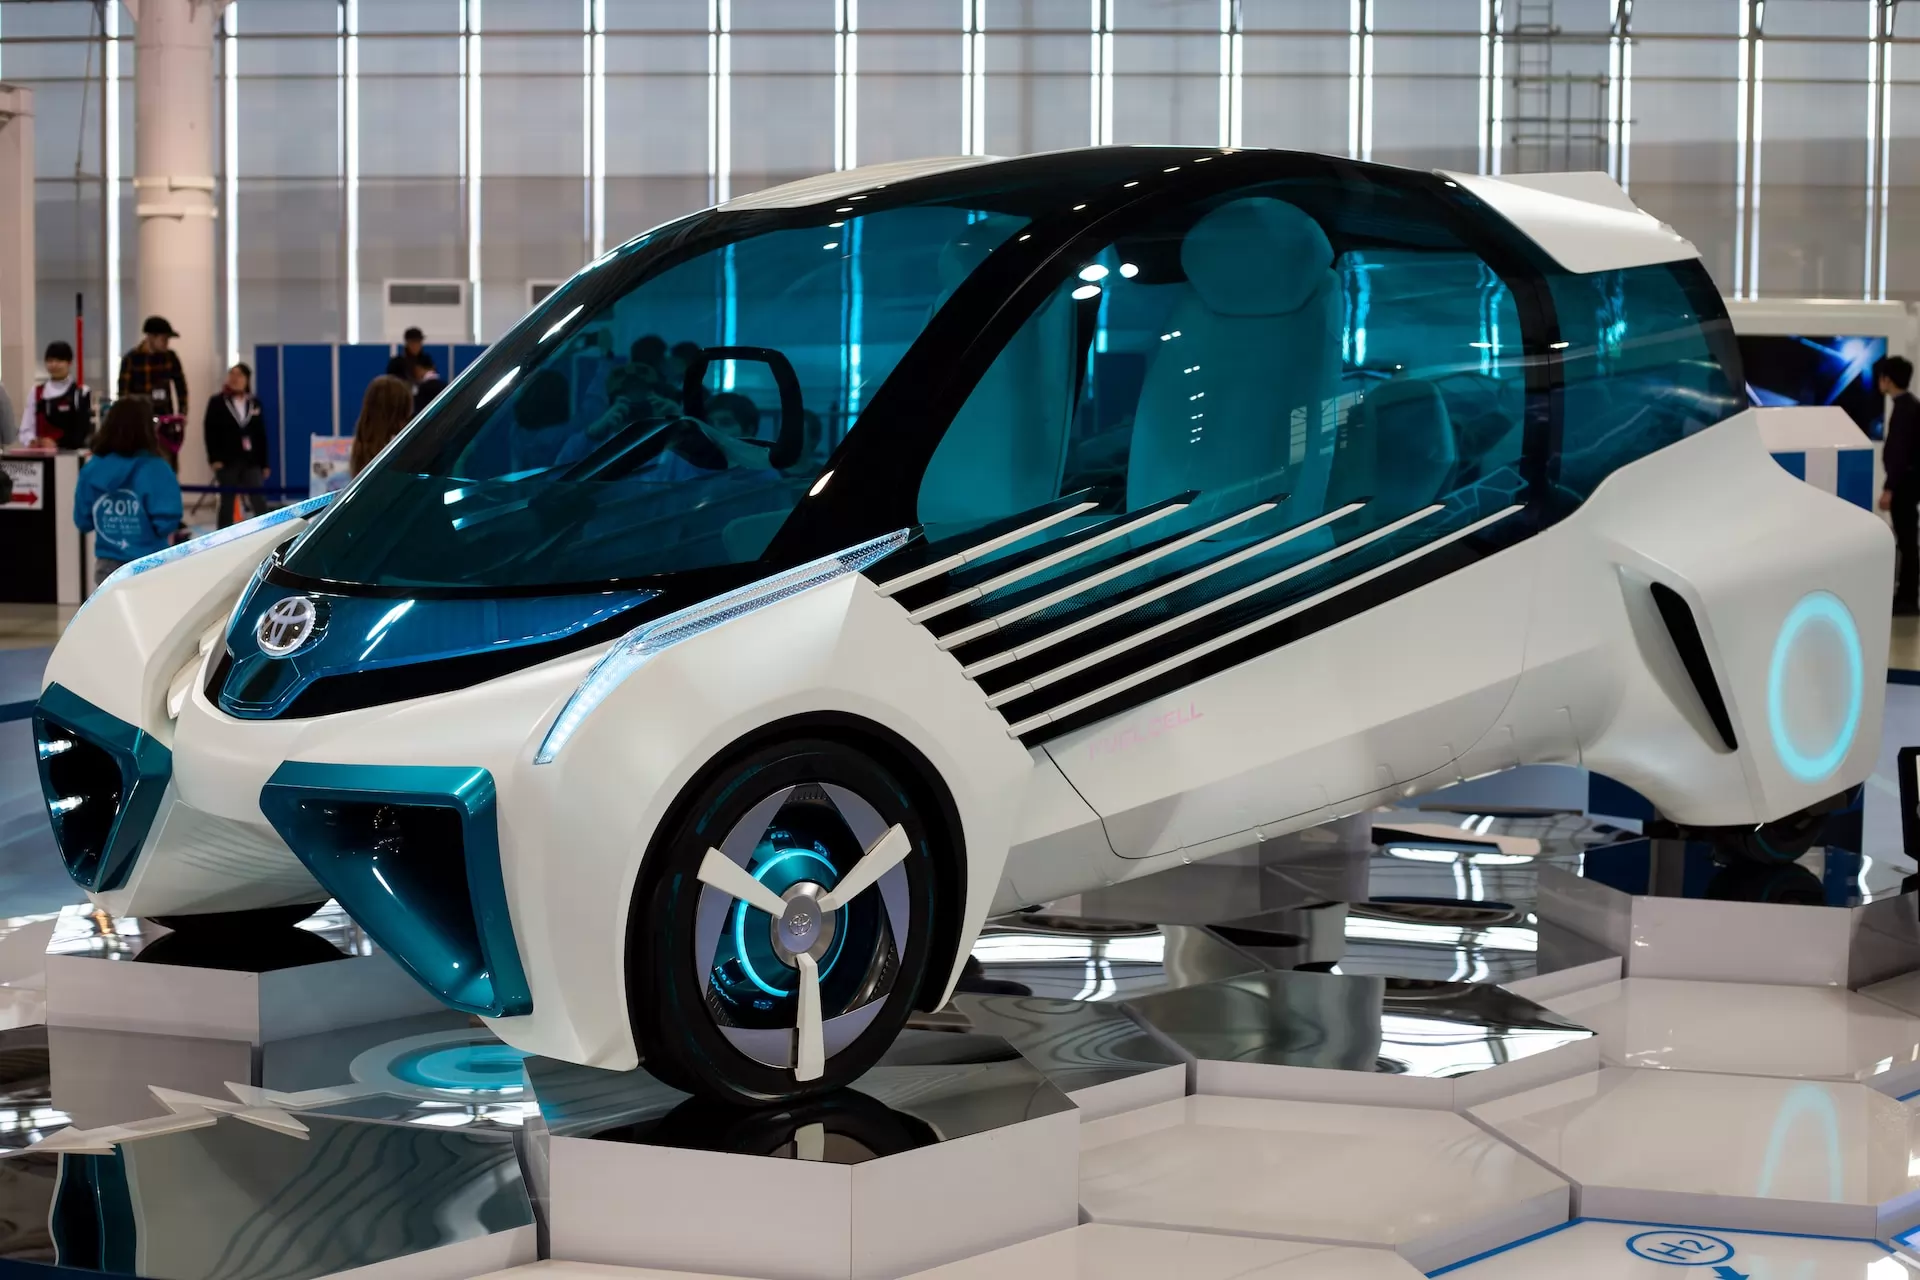 The hydrogen vehicle market